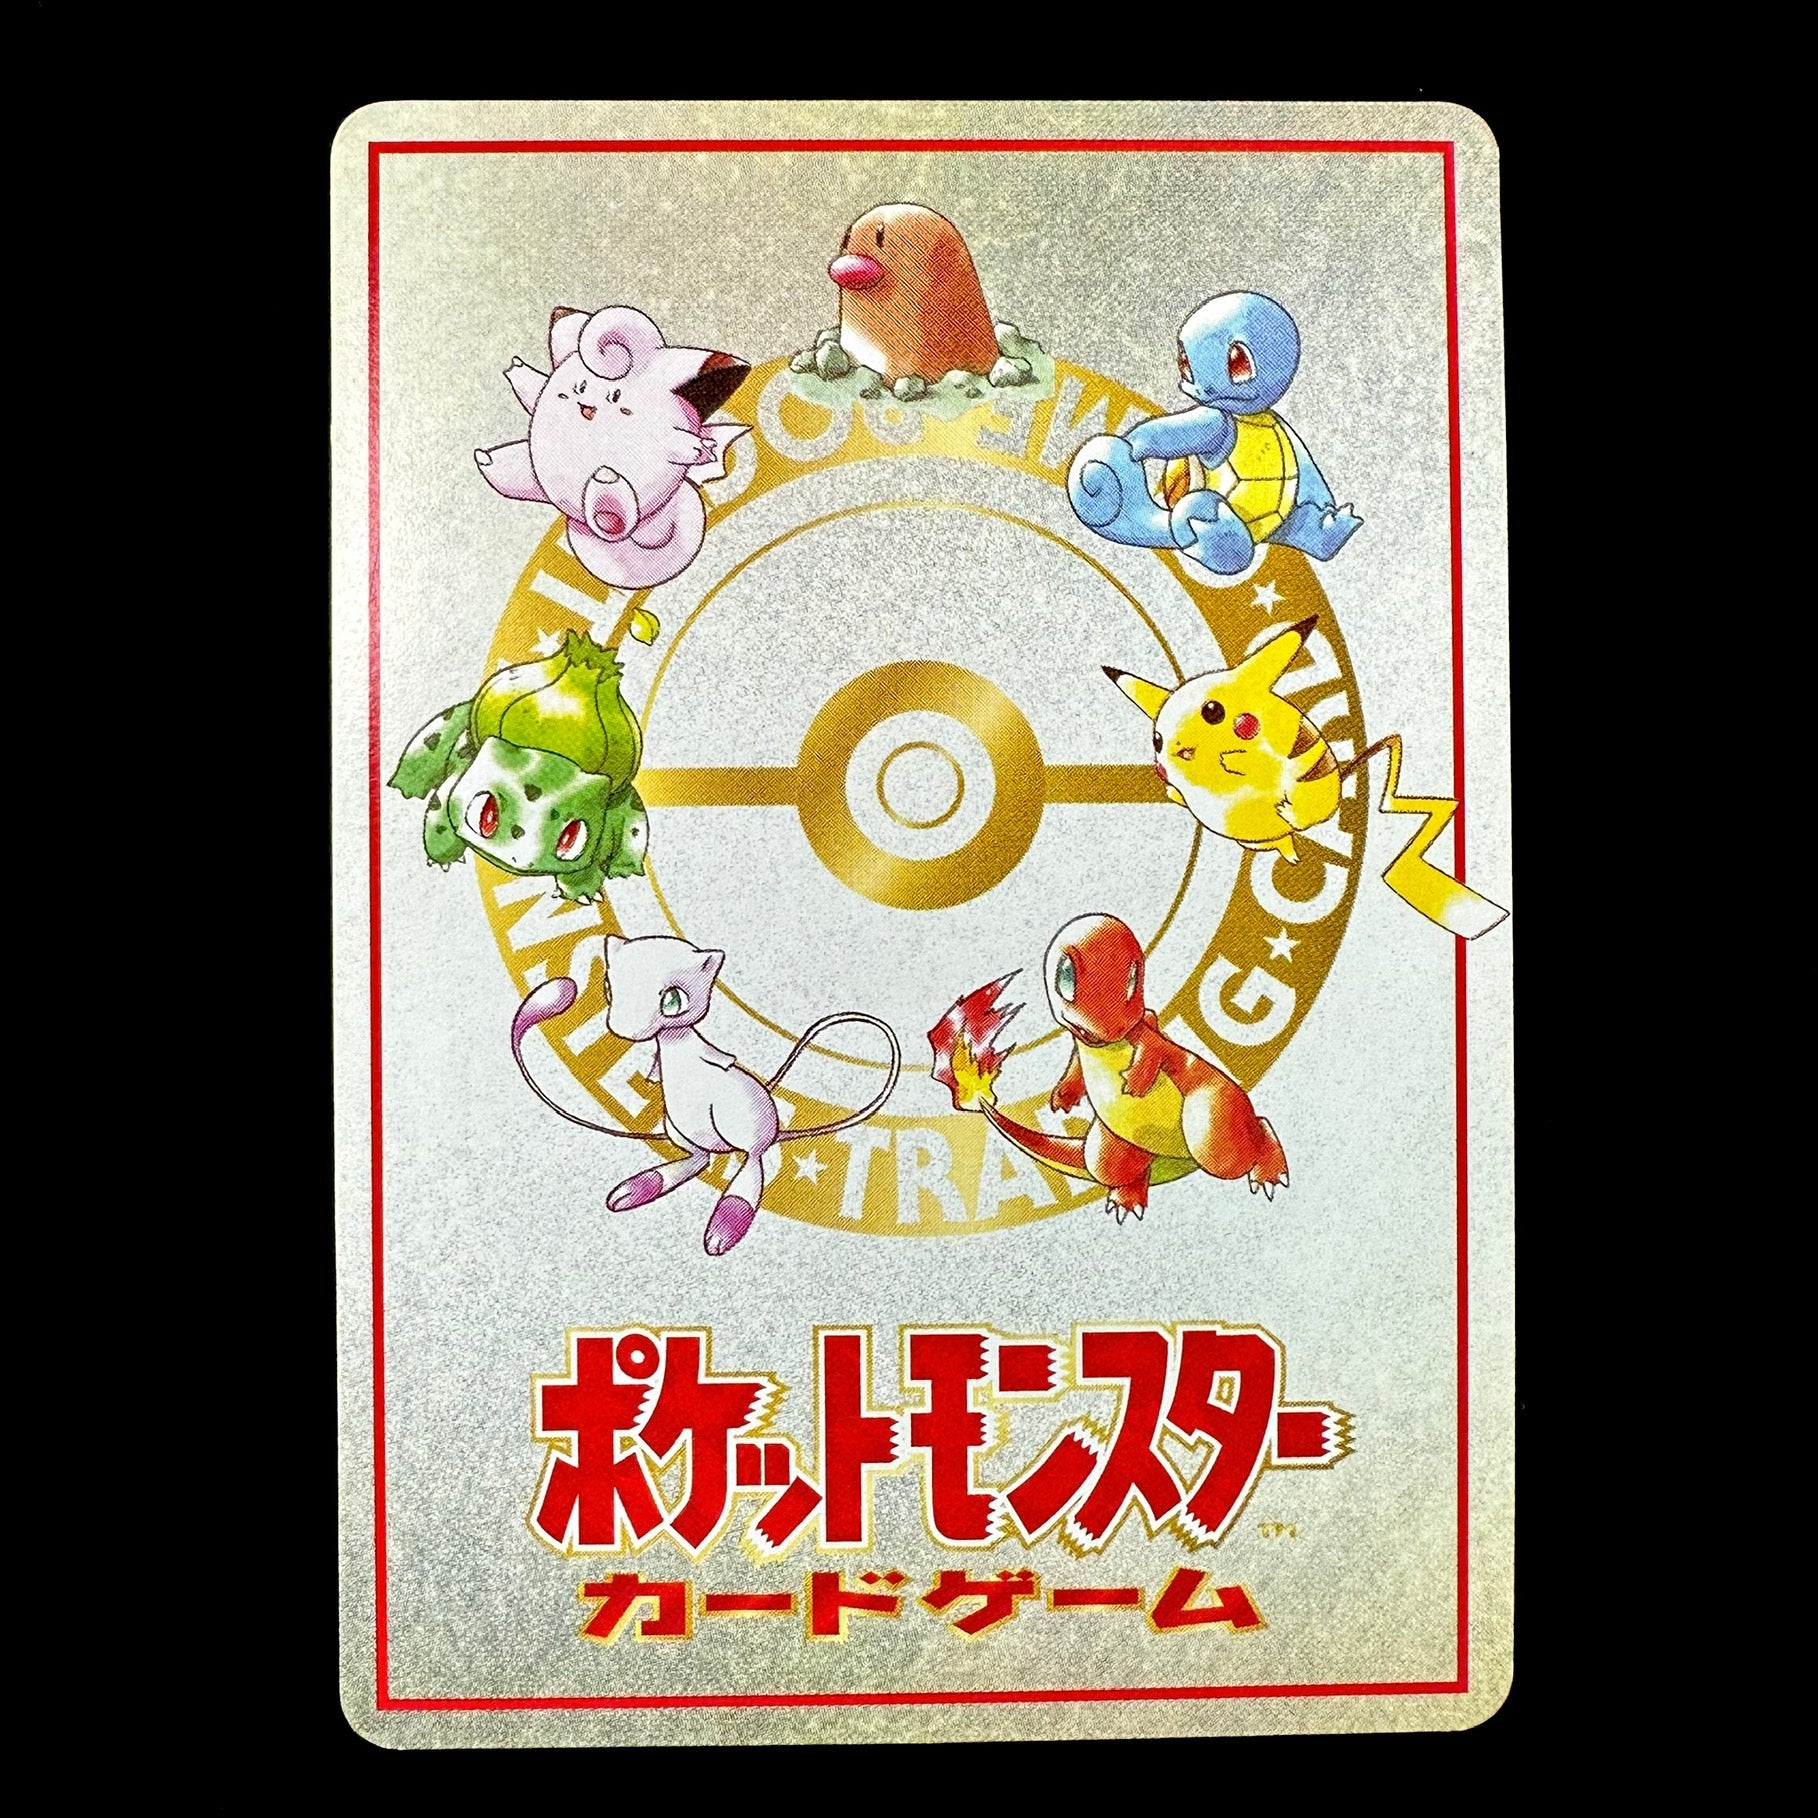 Pokémon Card Game "EXTRA RULE" No.03